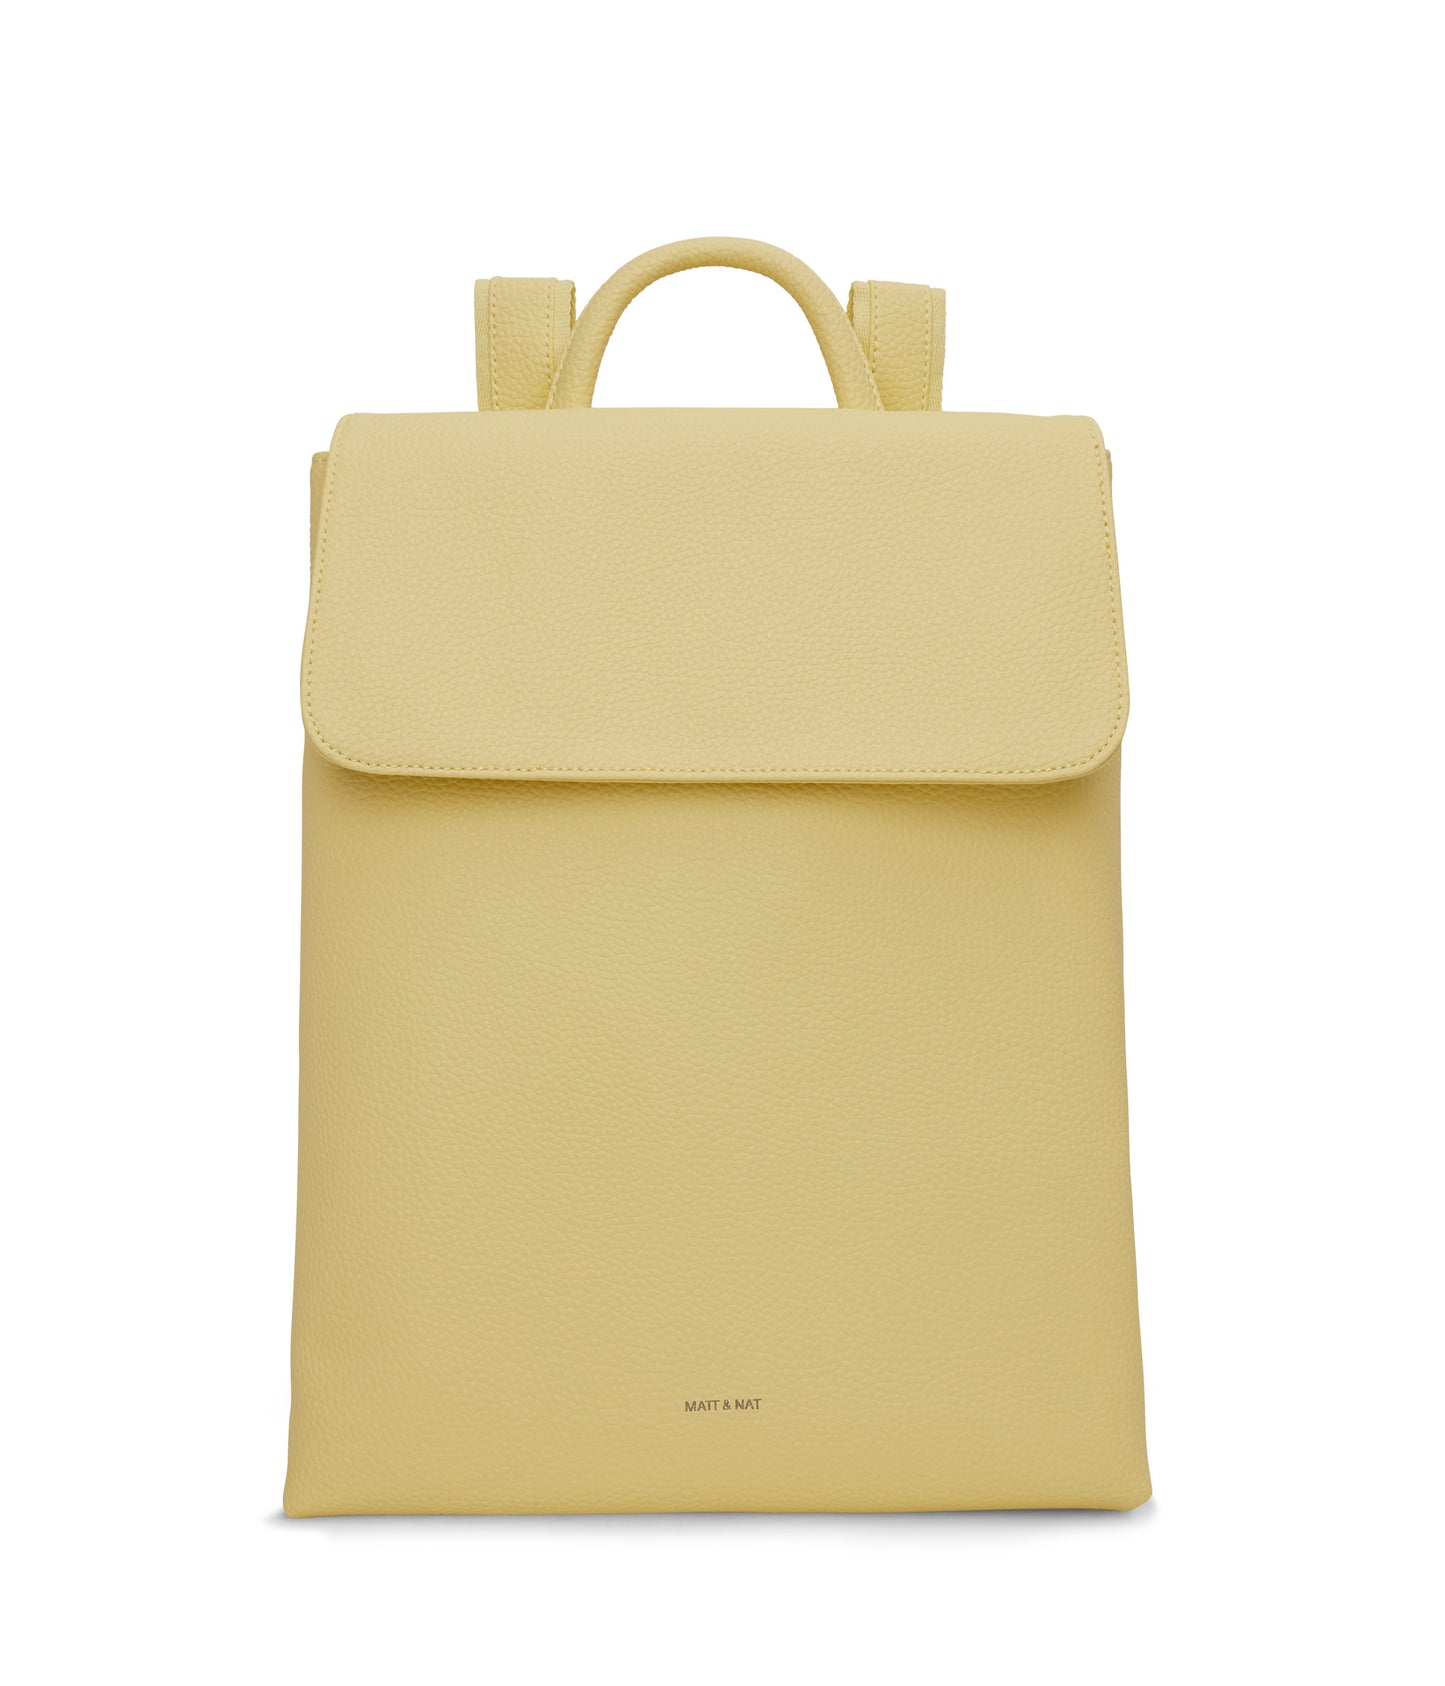 SEVAN Vegan Backpack - Purity | Color: Yellow - variant::daffodil